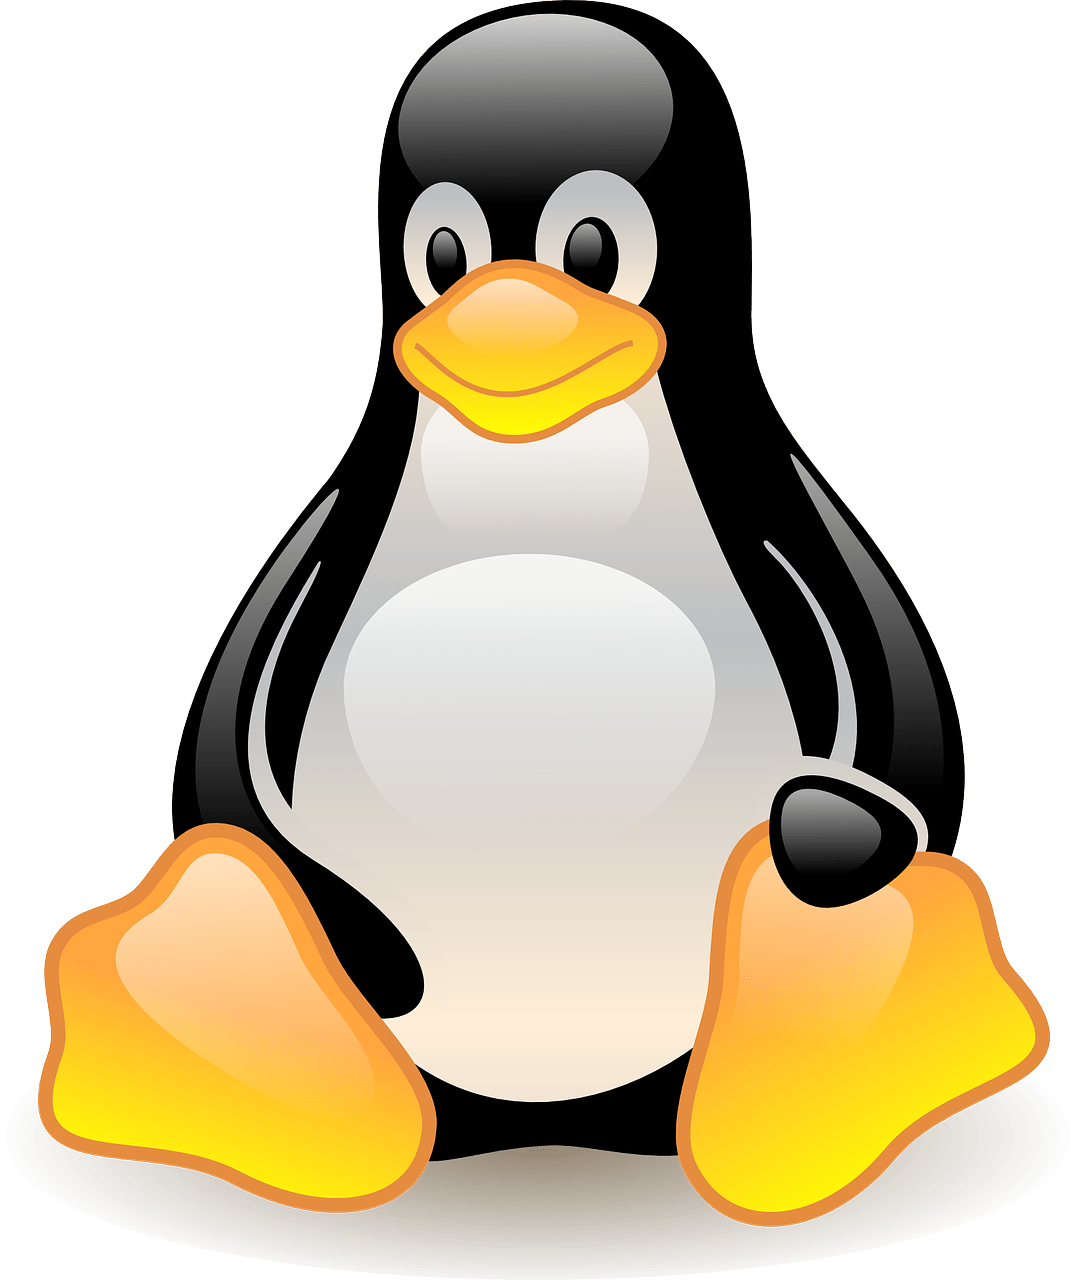 Suse Linux Logo